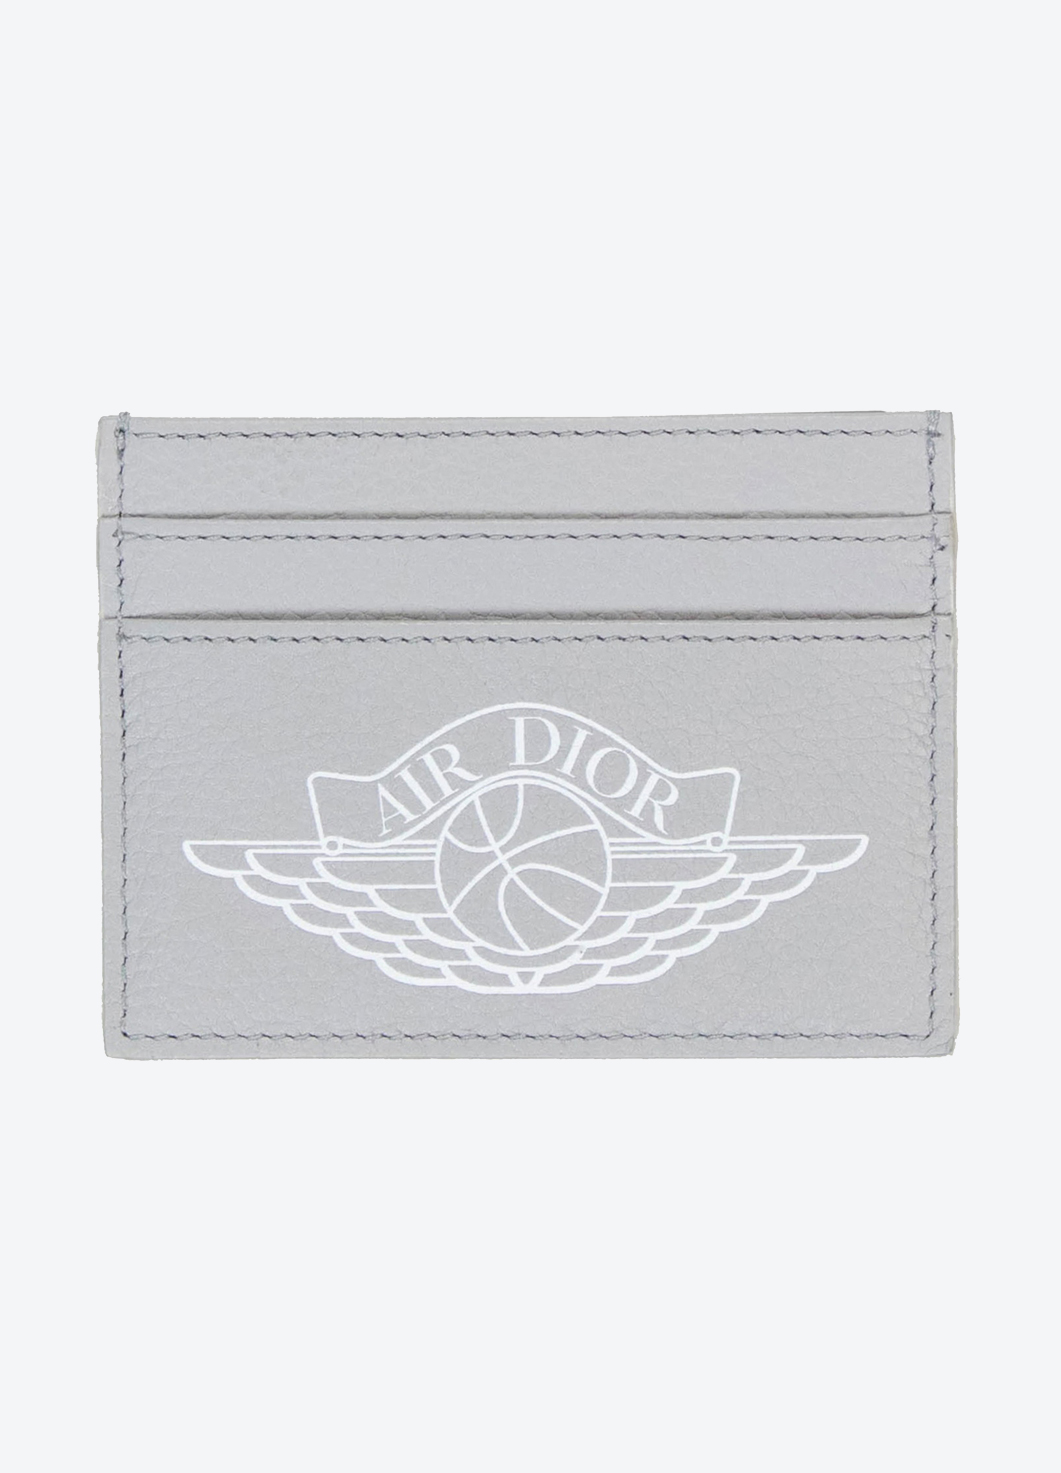 Dior x Jordan Wings Zip Wallet (4 Card Slot) Grey in Calfskin with